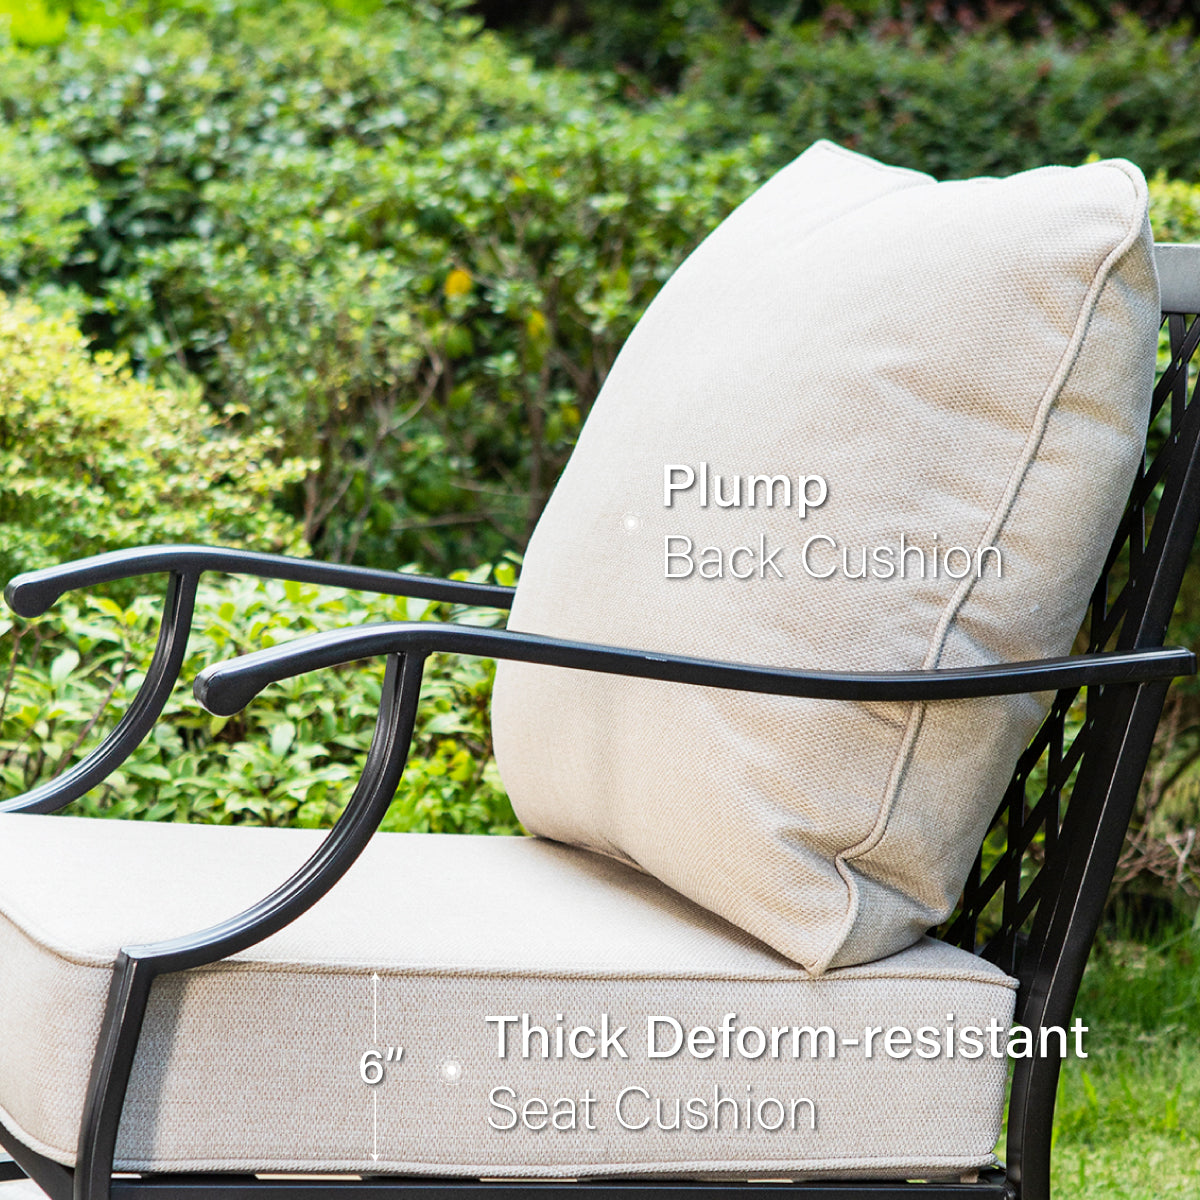 PHI VILLA 5-Seat Thick Cushion Conversation Sets with Ottoman